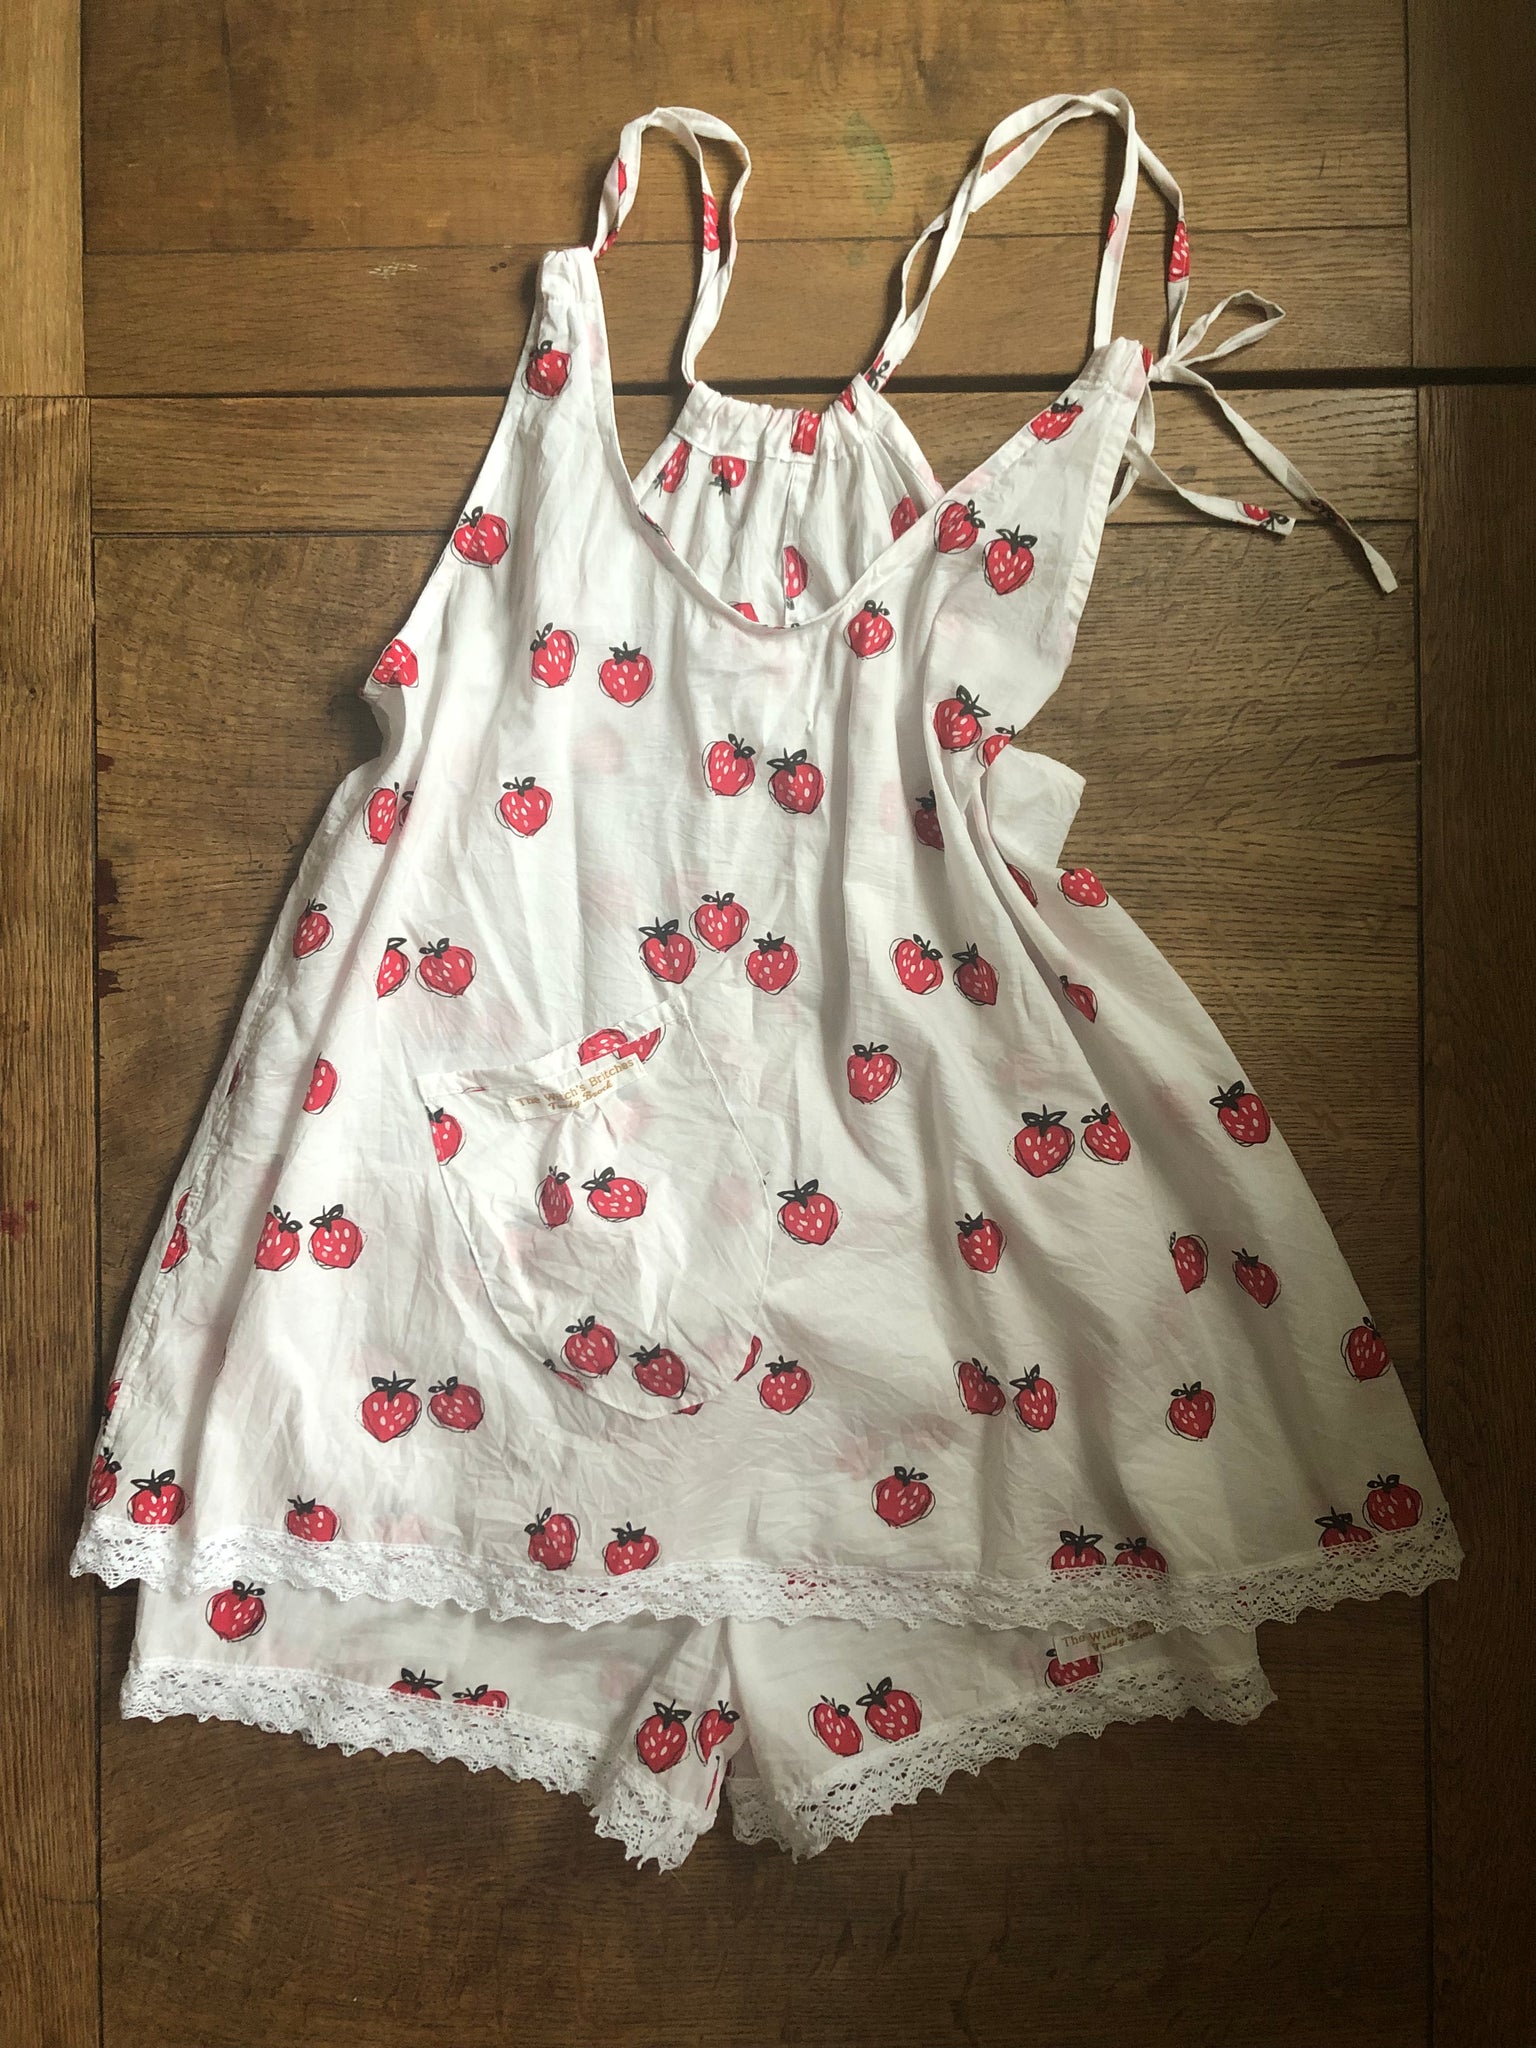 Strawberries print on white cotton batiste women’s camisole /sun top (36” bust)